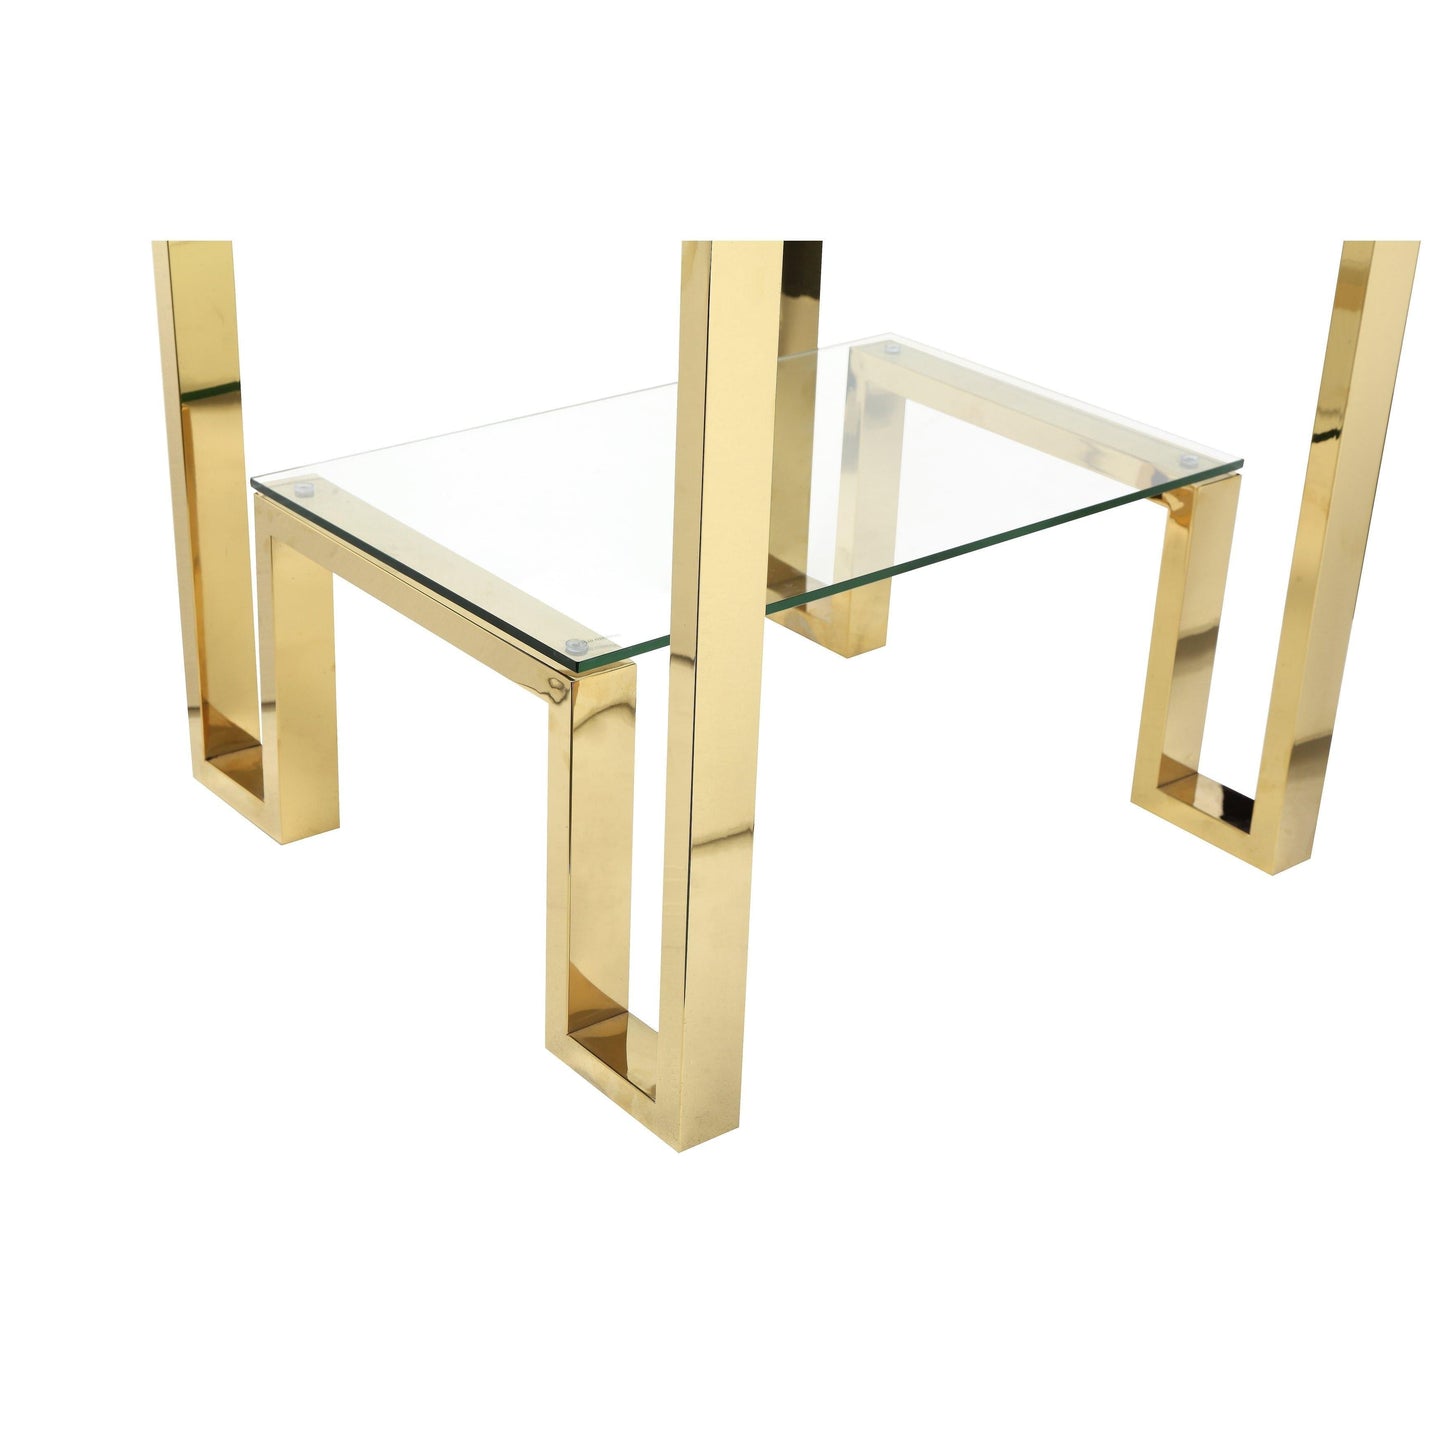 Gold High Polished Glass Side Table - MAIA HOMES